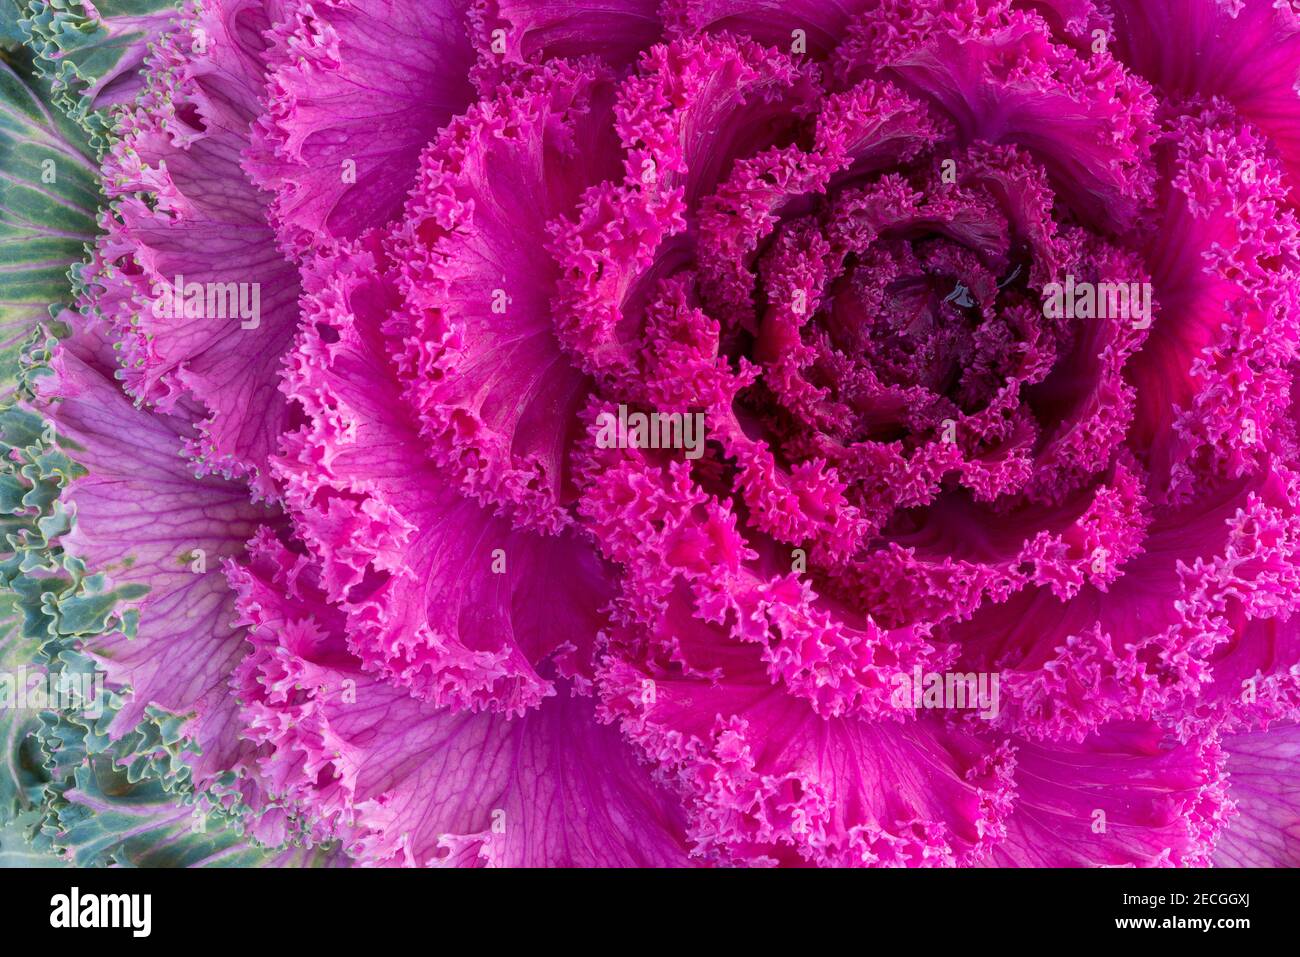 Purple ornamental kale, a macro photograph. Nature fractals. Stock Photo